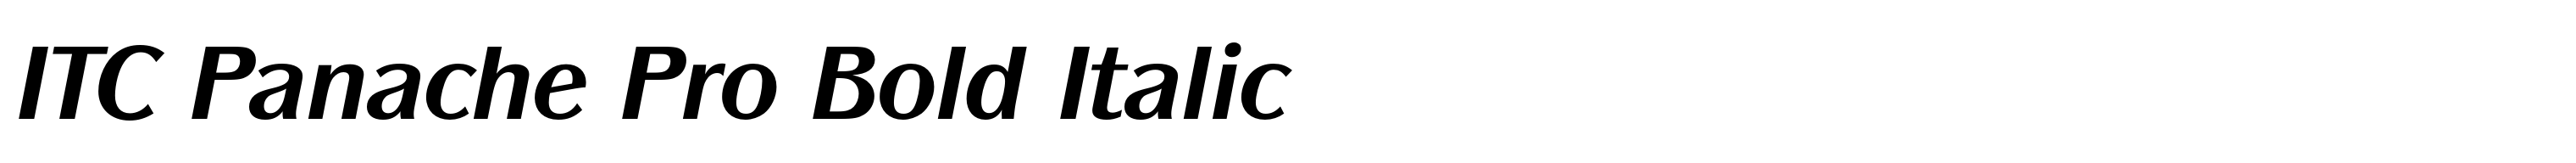 ITC Panache Pro Bold Italic